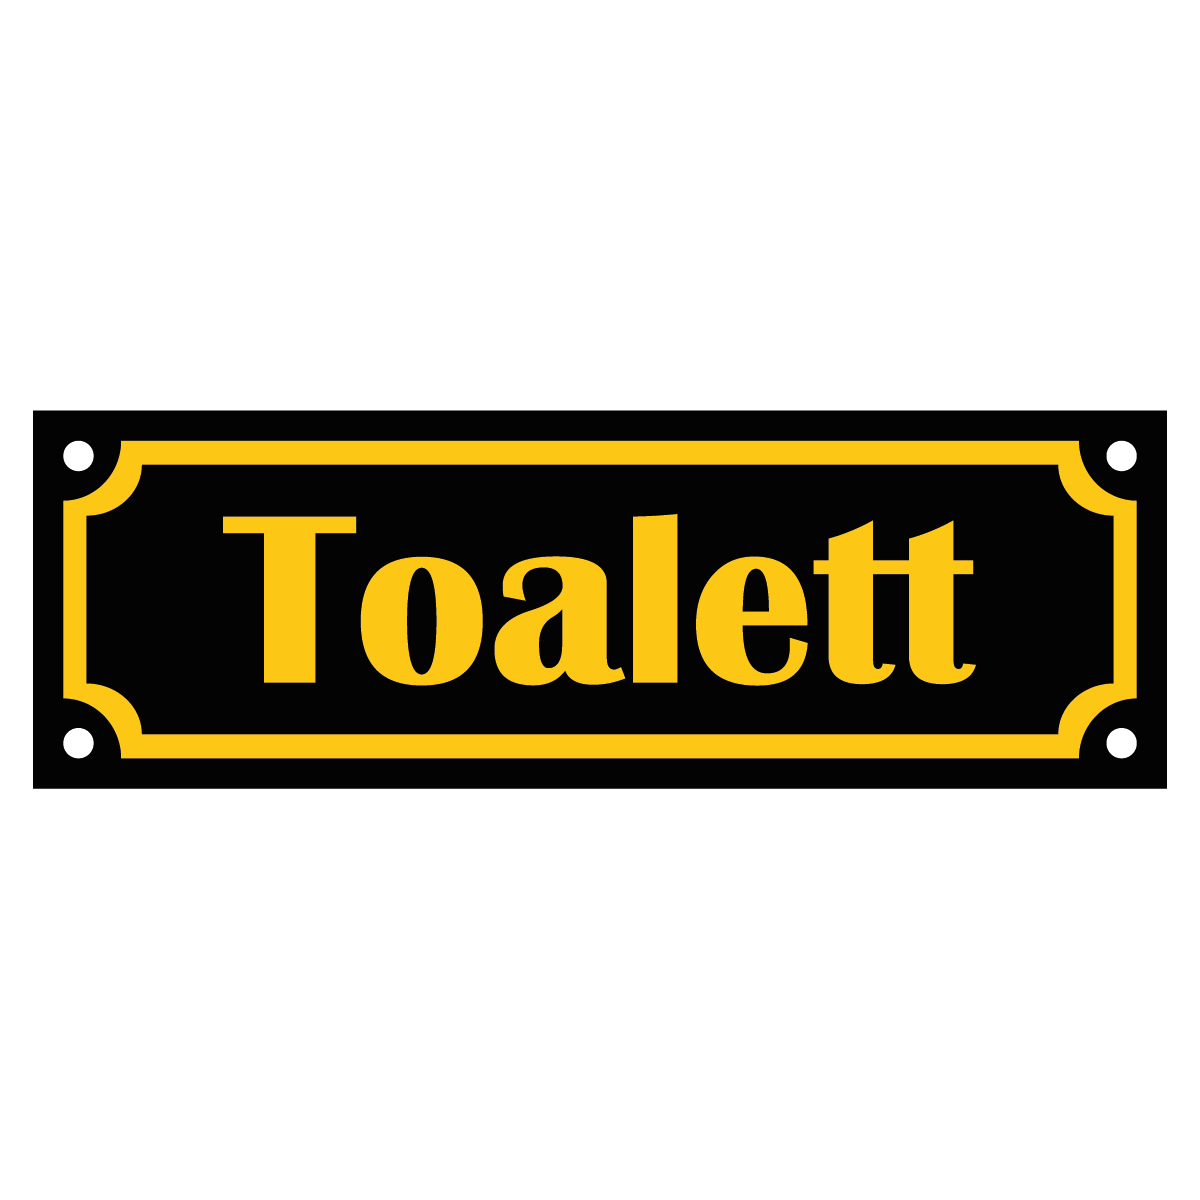 Toalett - Skylt - 150x50mm - Svart - Gul